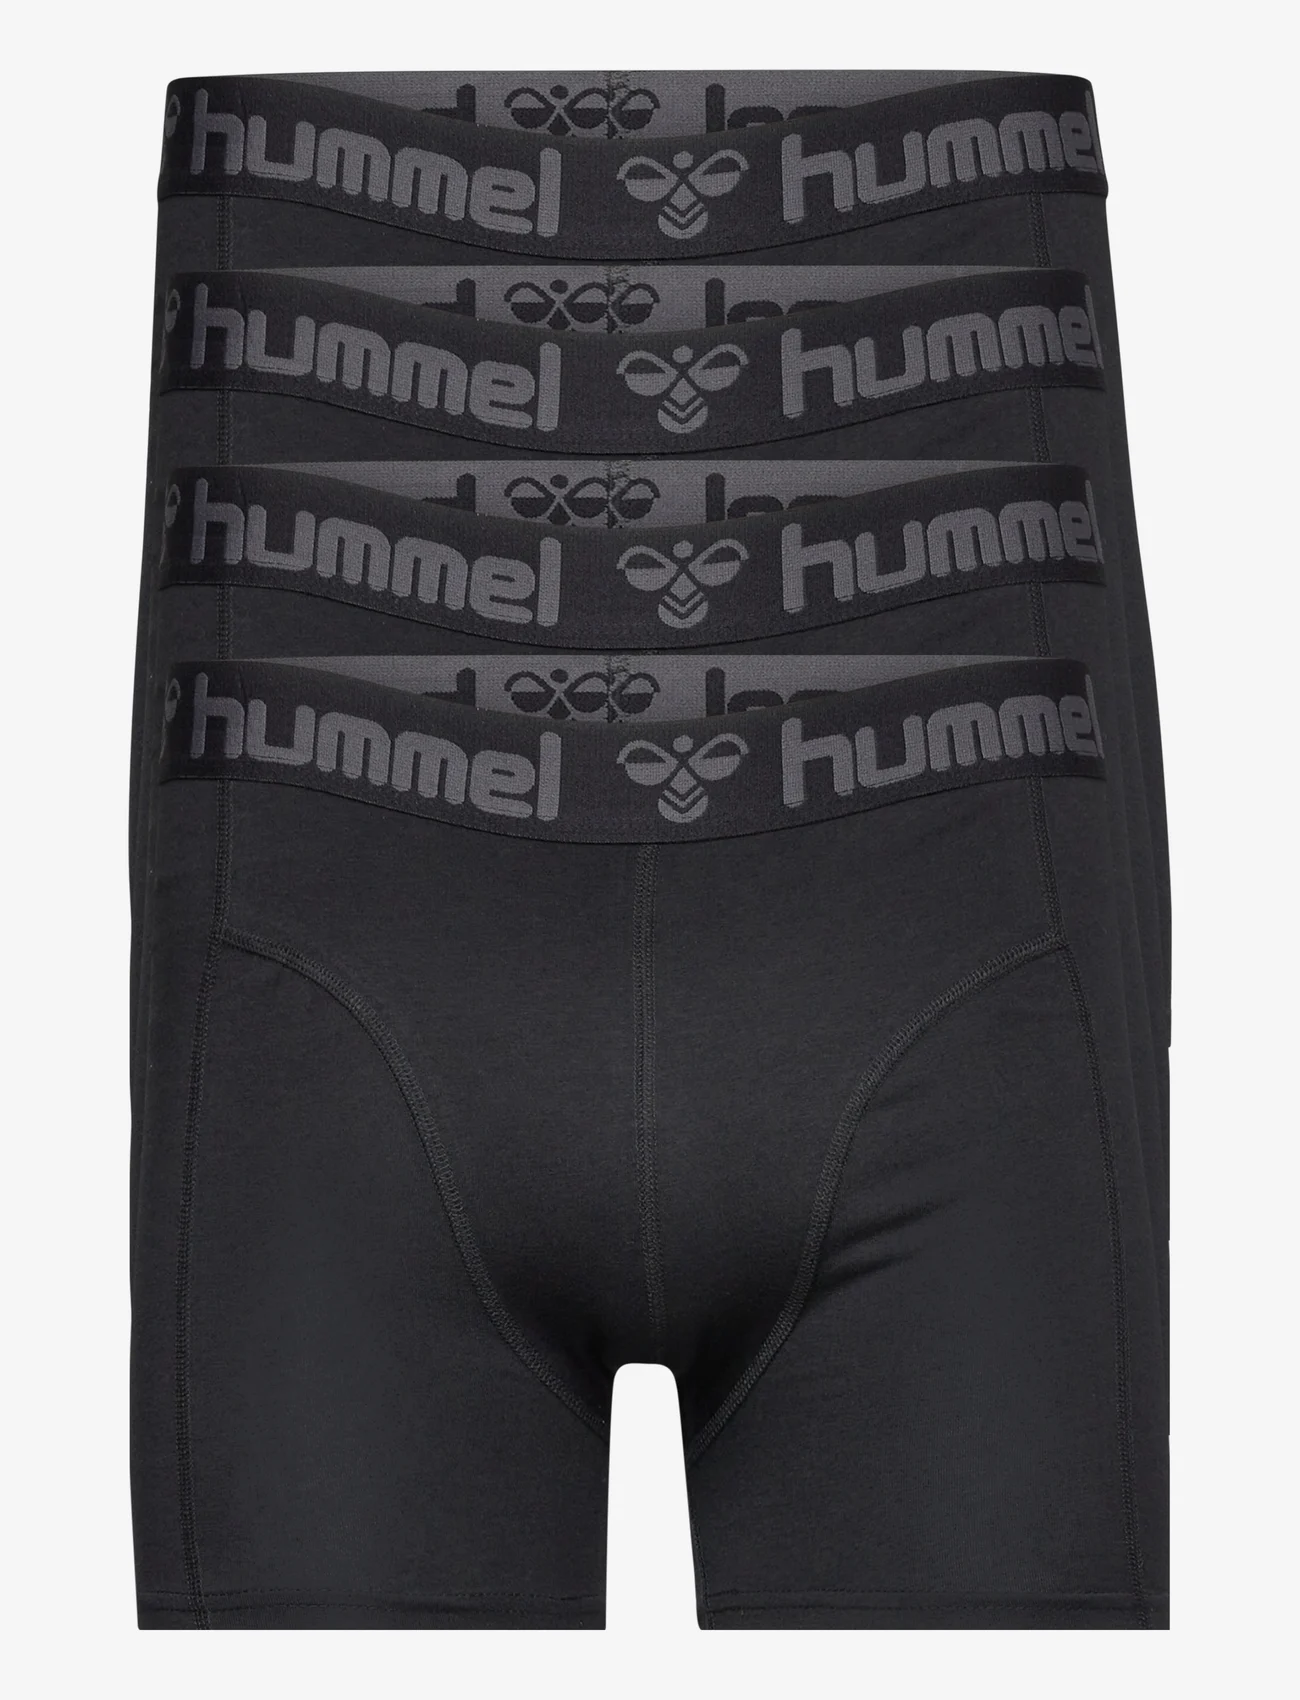 Hummel - hmlMARSTON 4-PACK BOXERS - boxer briefs - black/black - 0